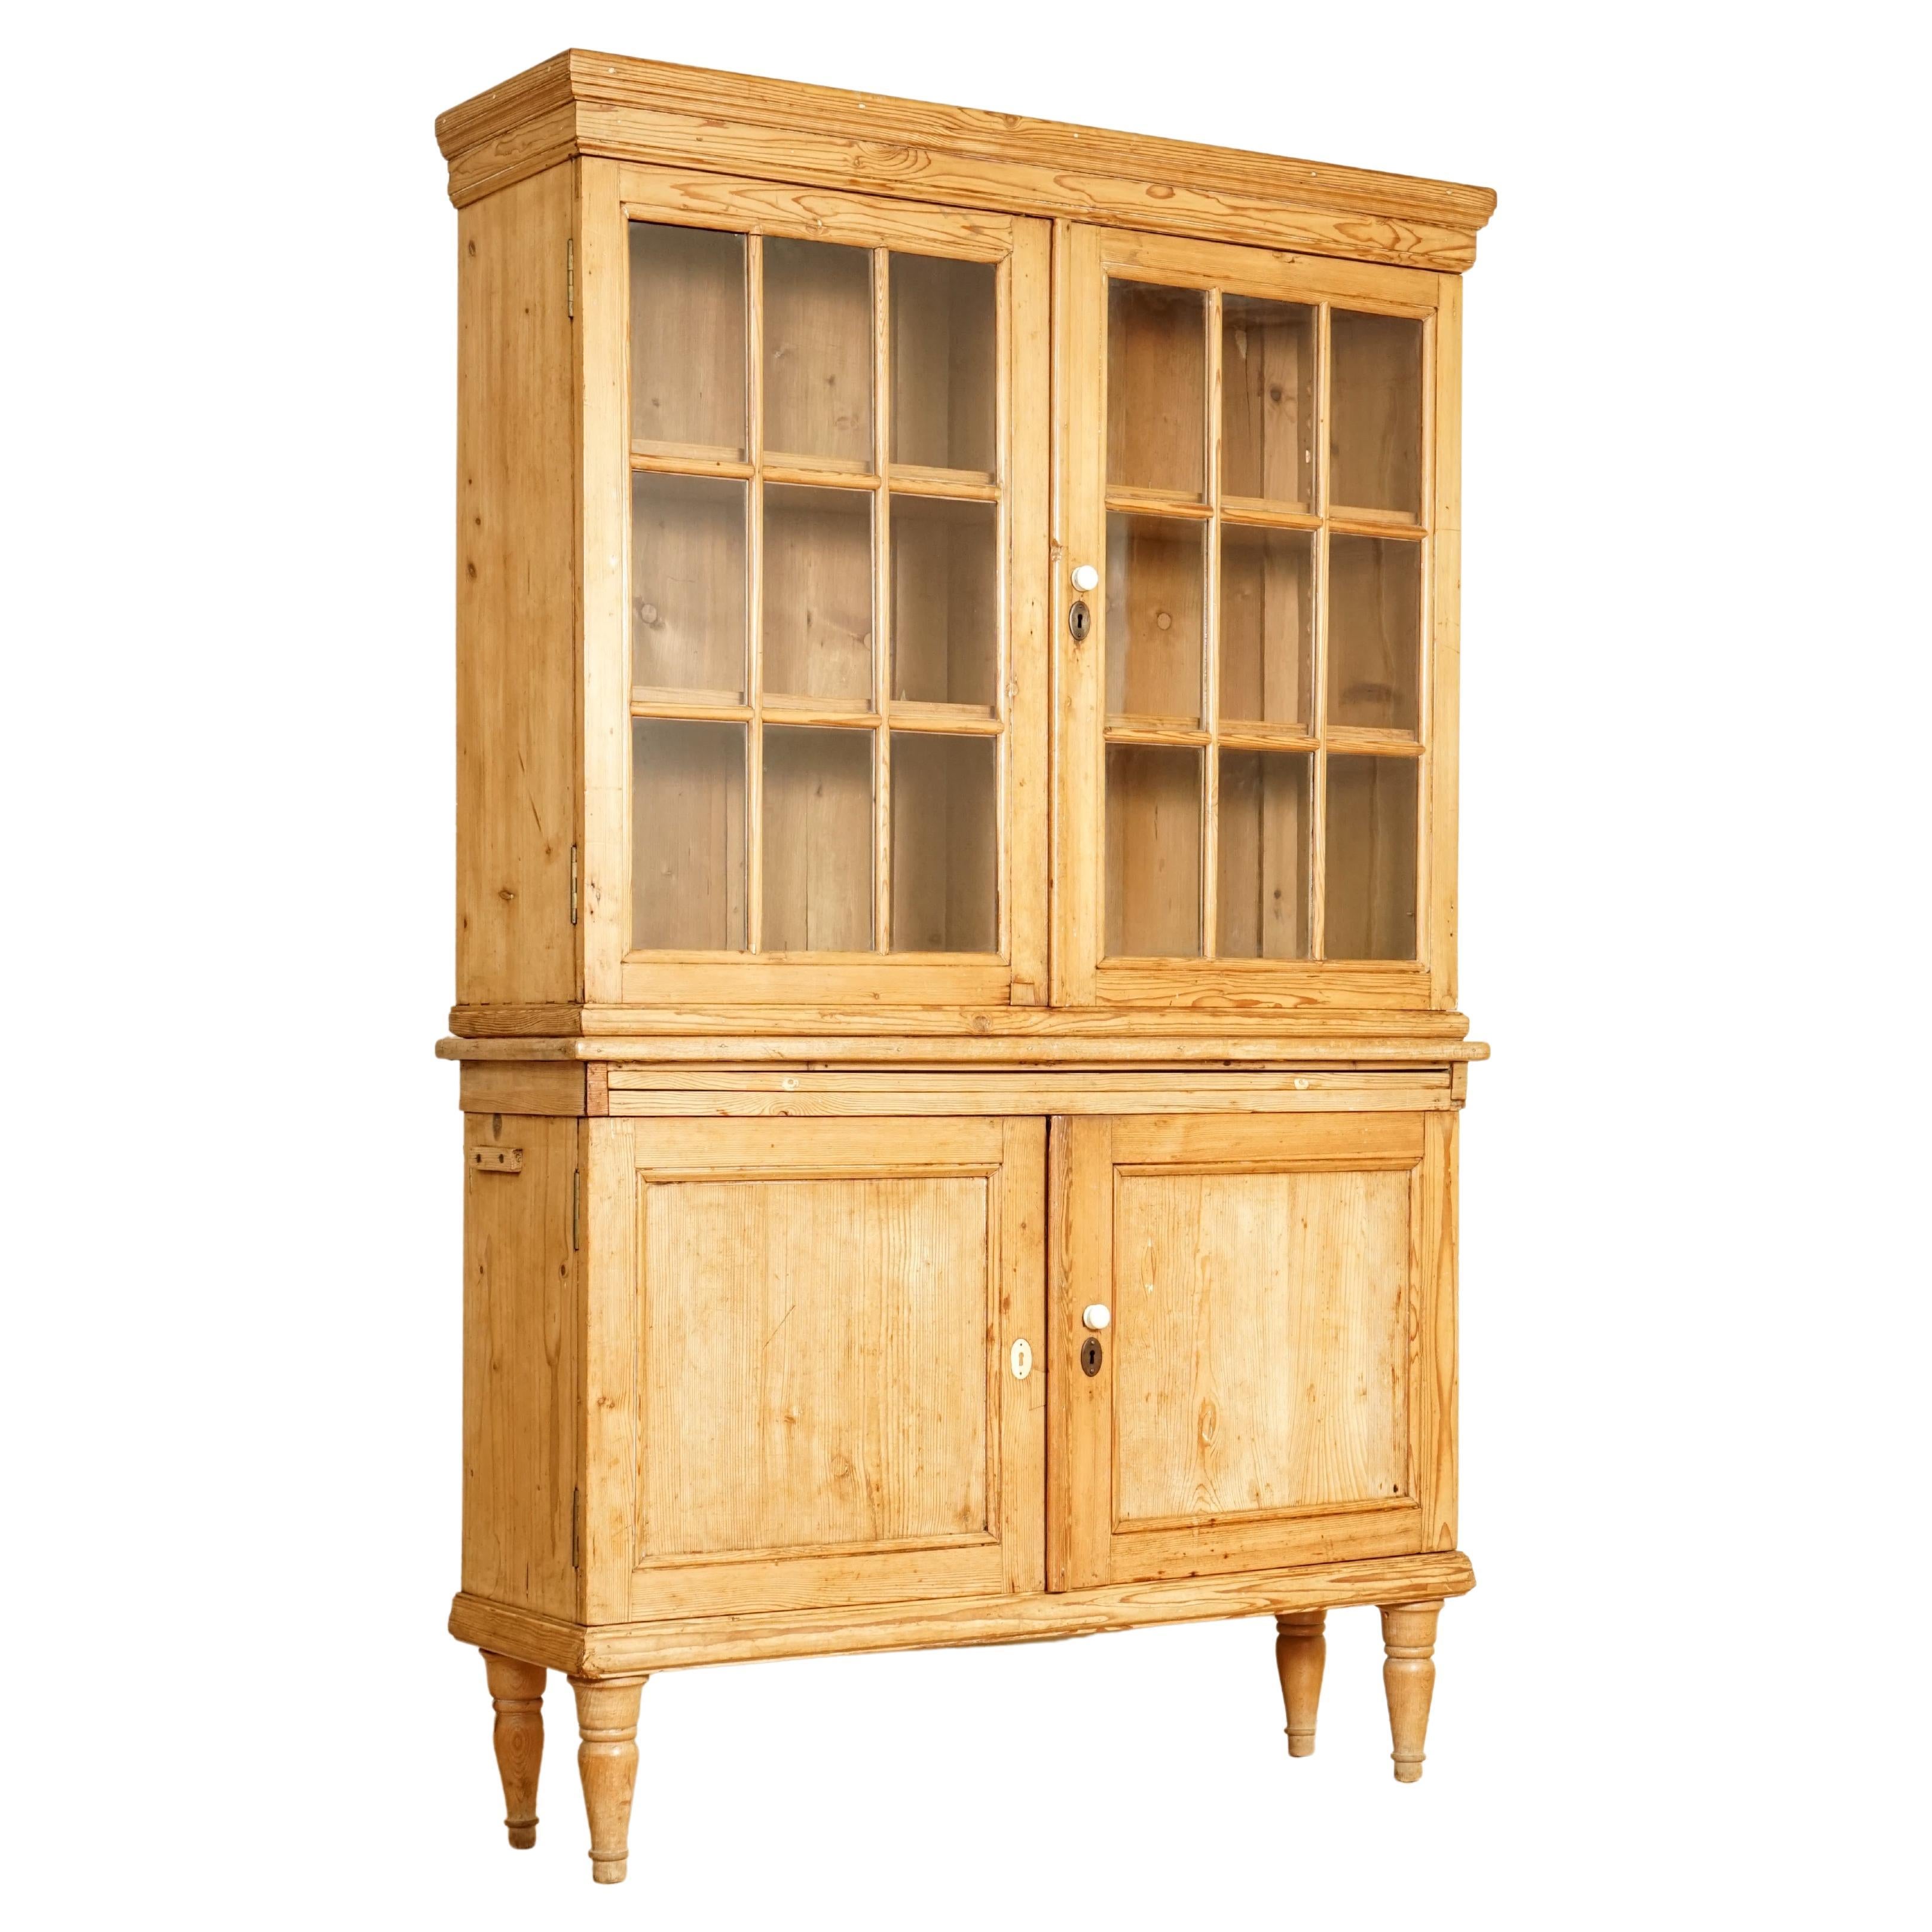 Rare Antique German Pine Kitchen Cabinet with Adjustable Shelves